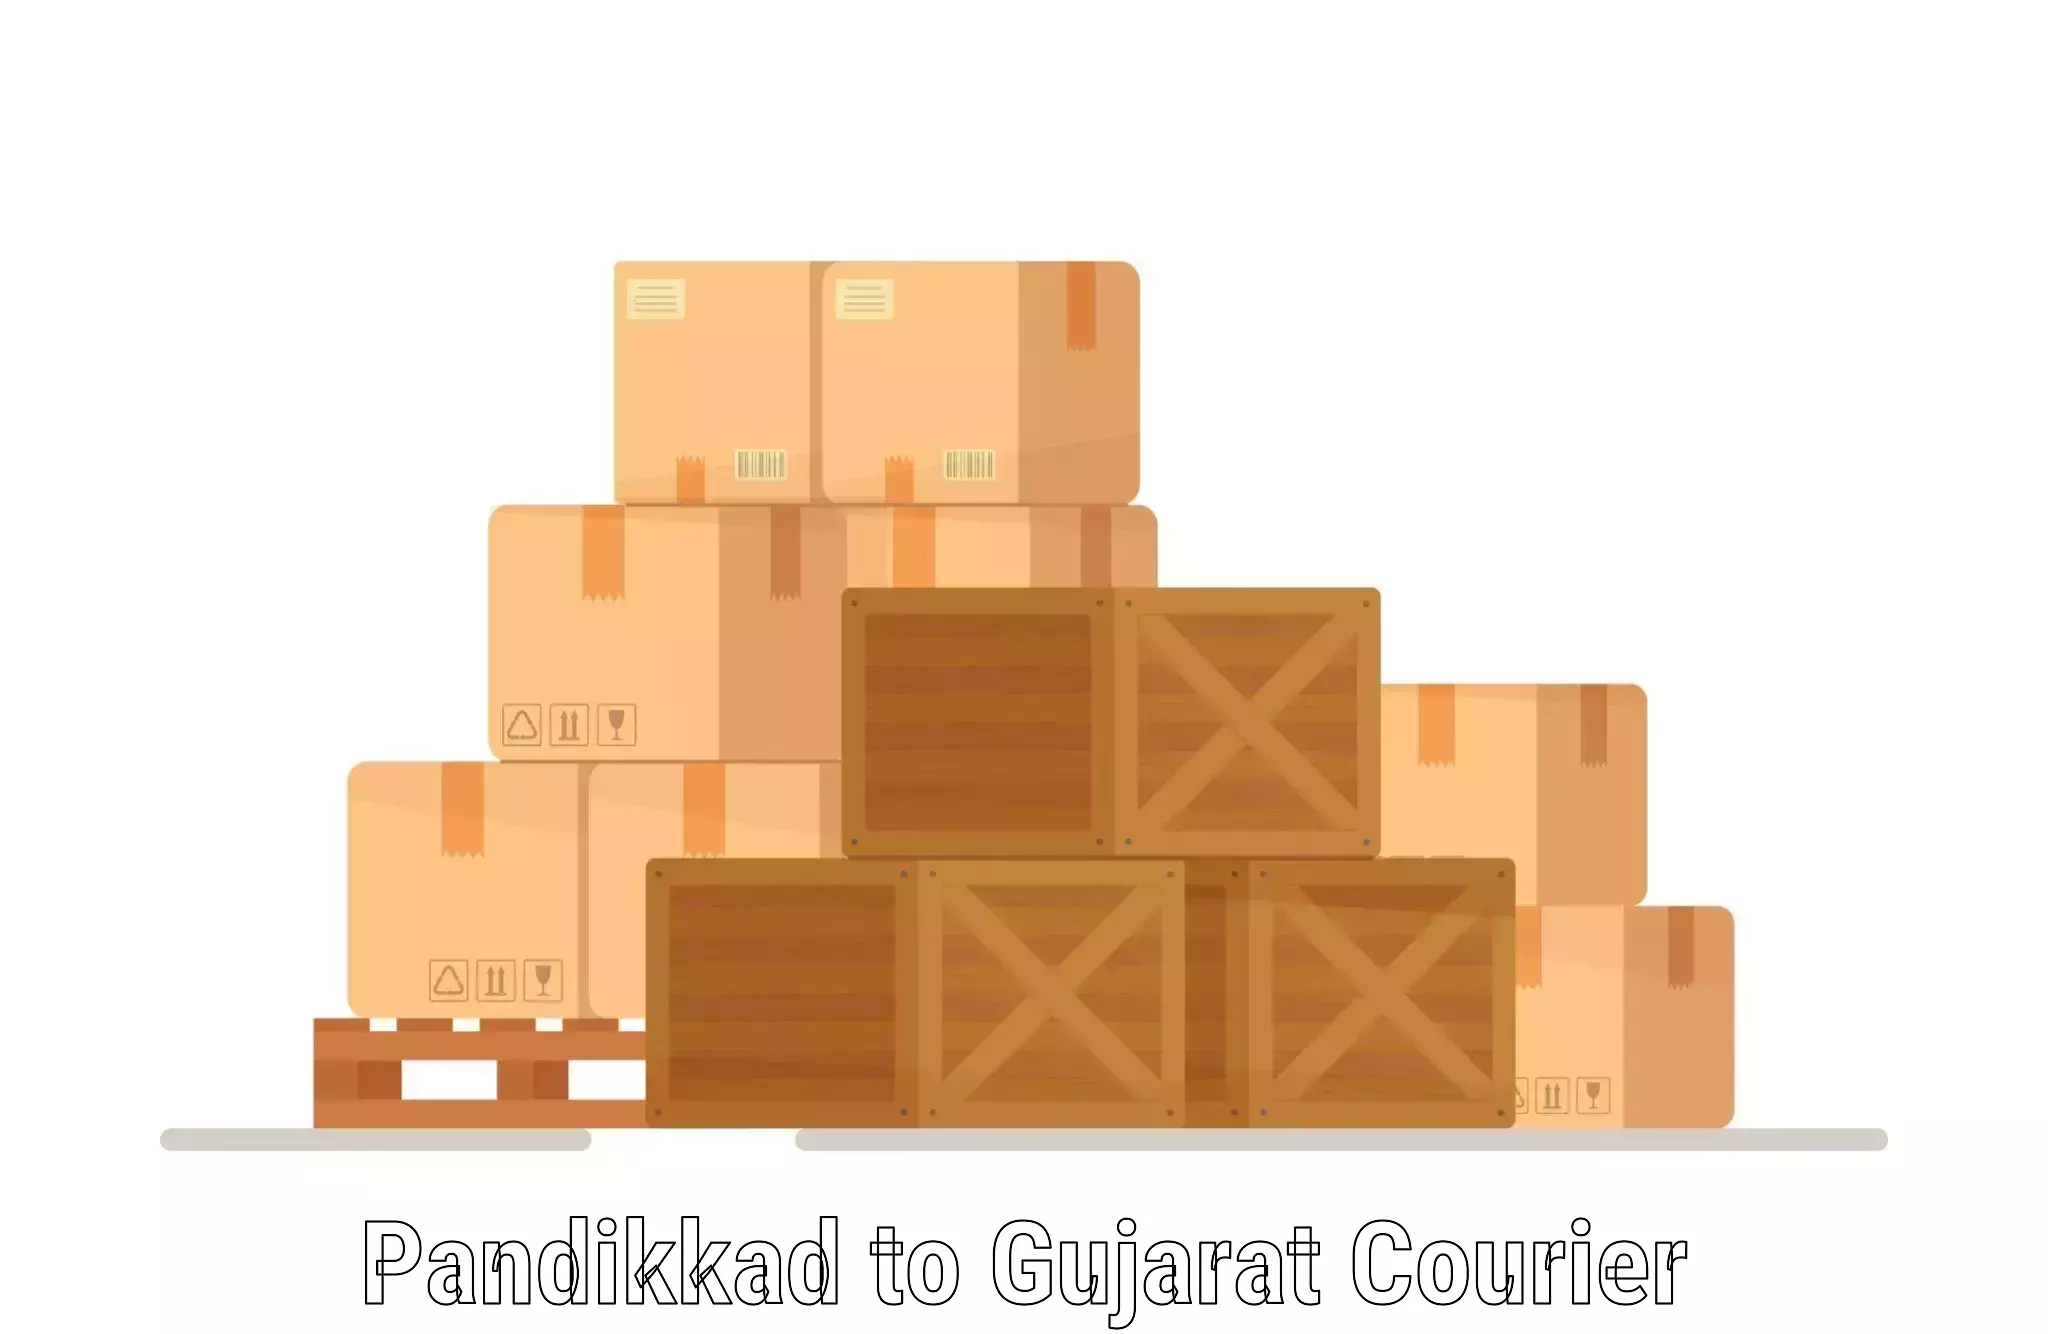 Regular parcel service Pandikkad to Savar Kundla